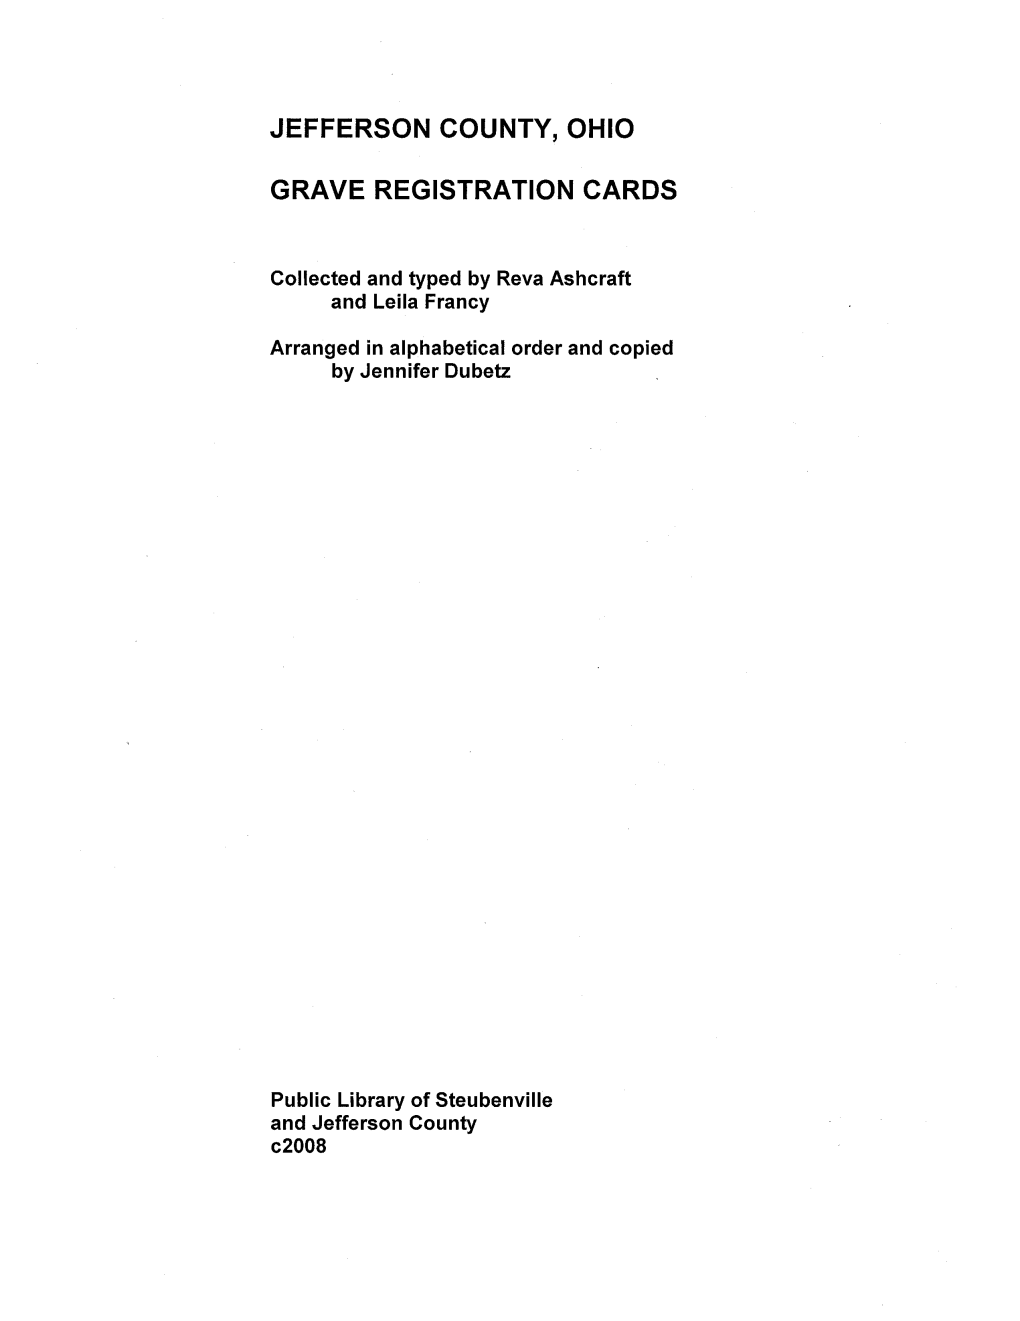 Jefferson County, Ohio Grave Registration Cards